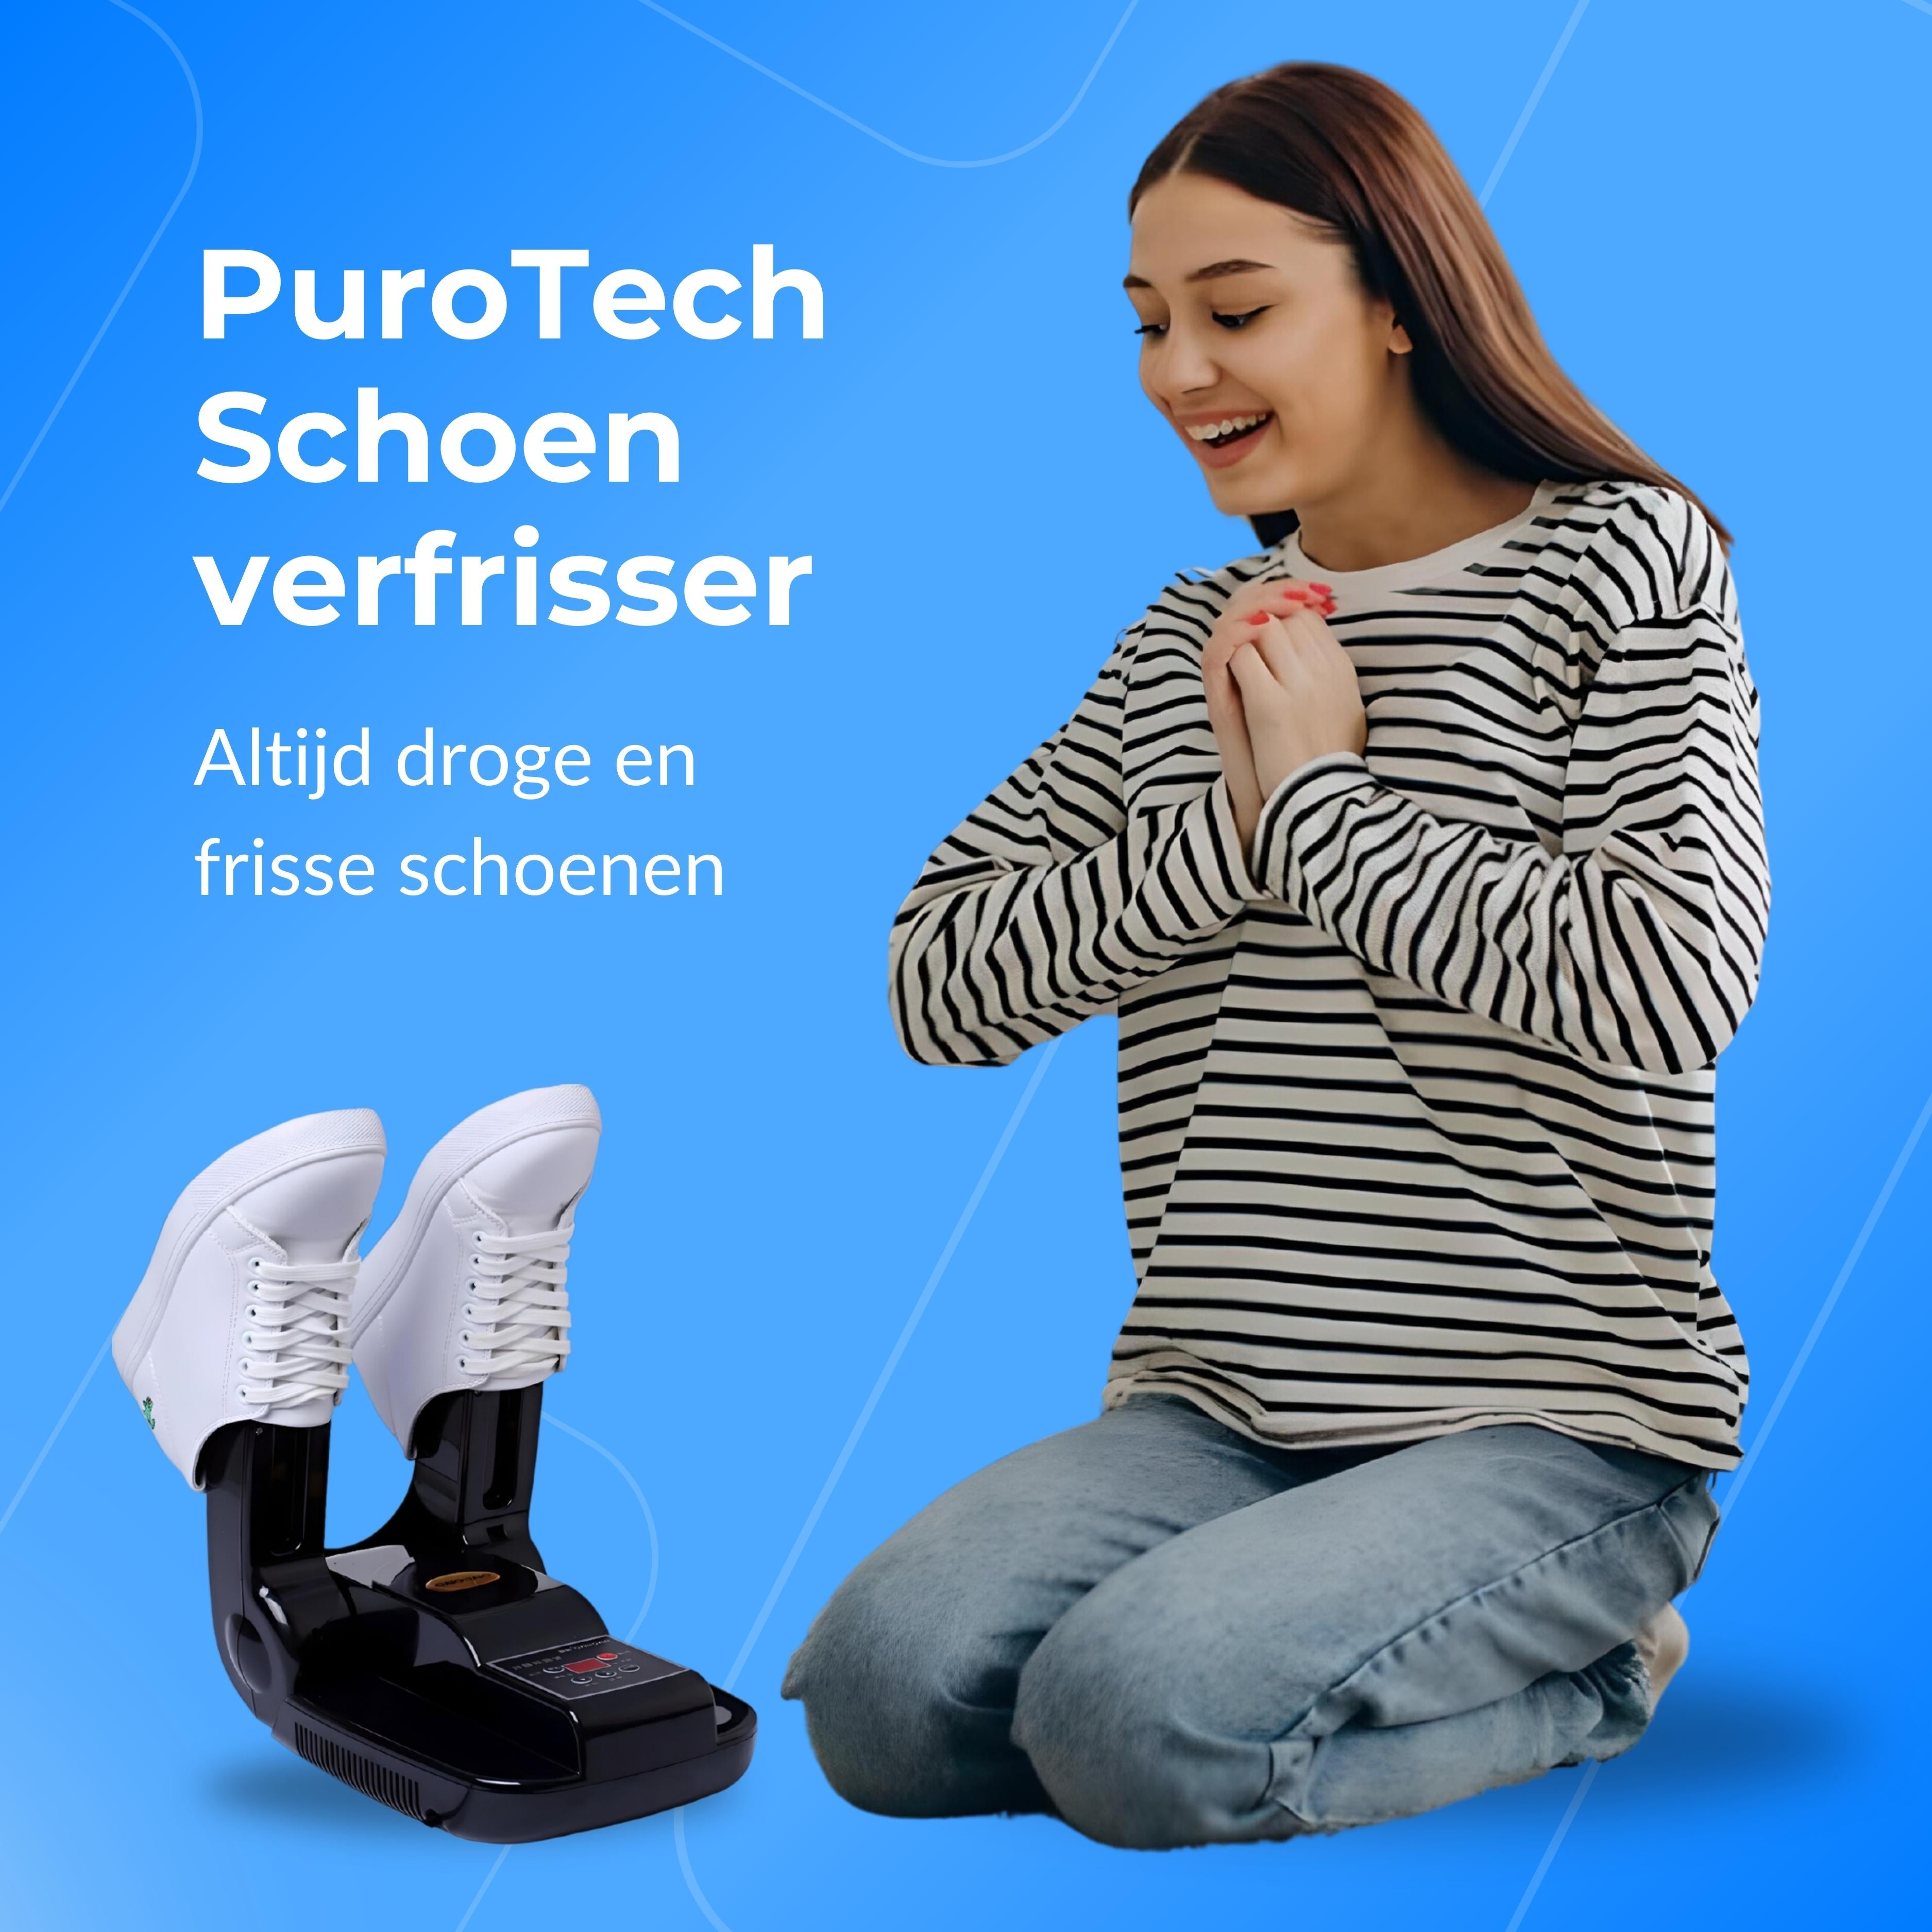 PuroTech Slimme Schoenendroger